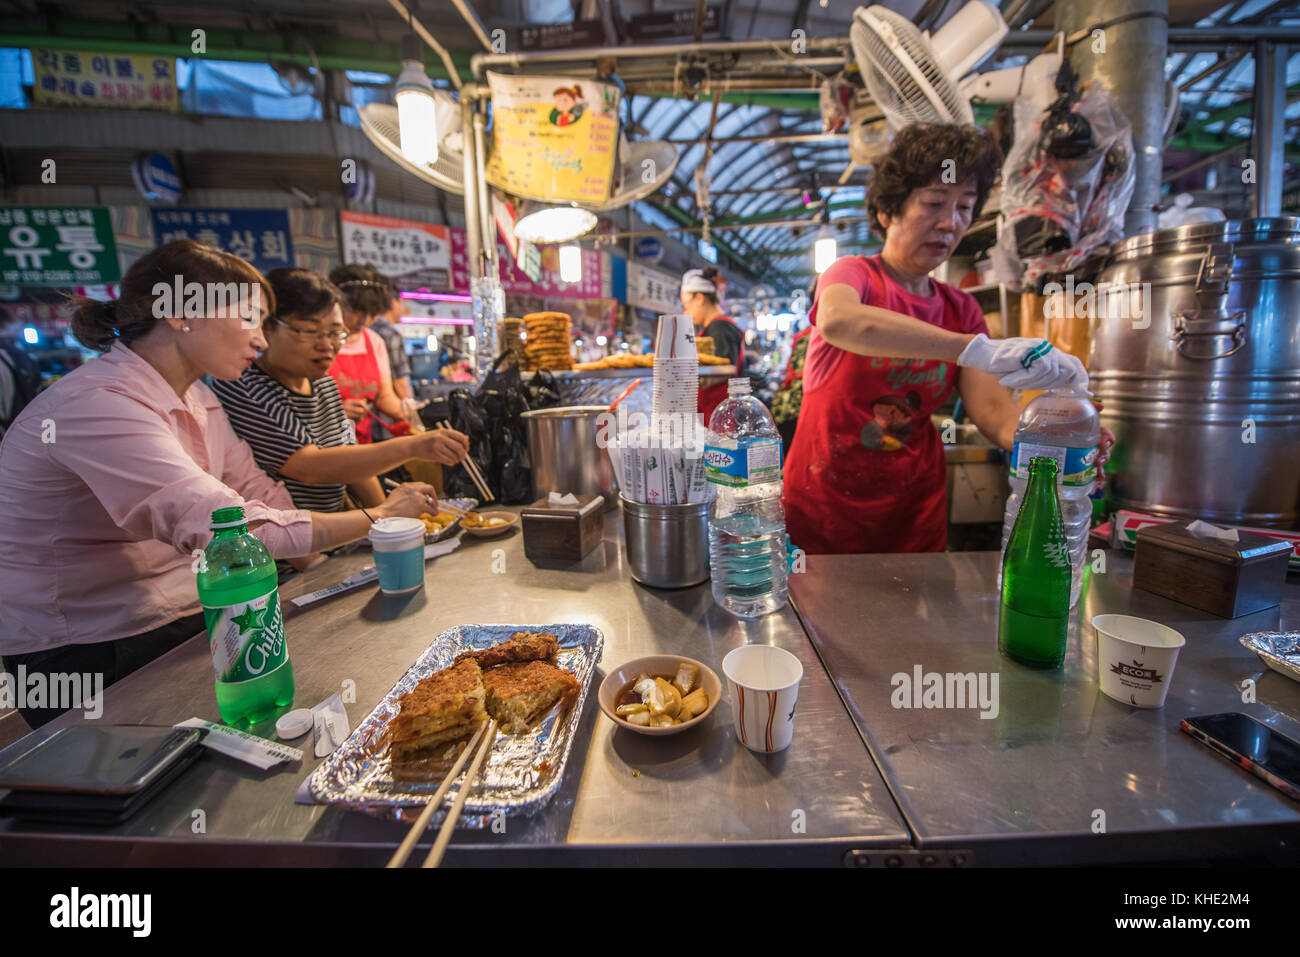 Eating 'bindaeduk' at a food stall in Kwangjang Market in Seoul 2017. Stock Photo